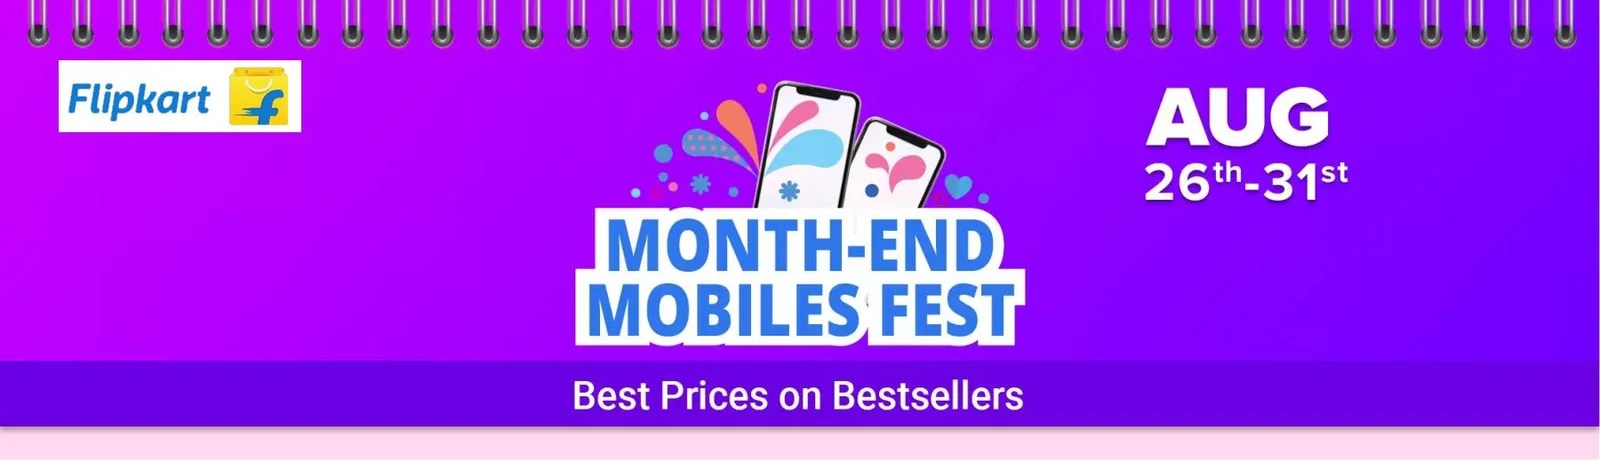 flipkart - month end mobile fest